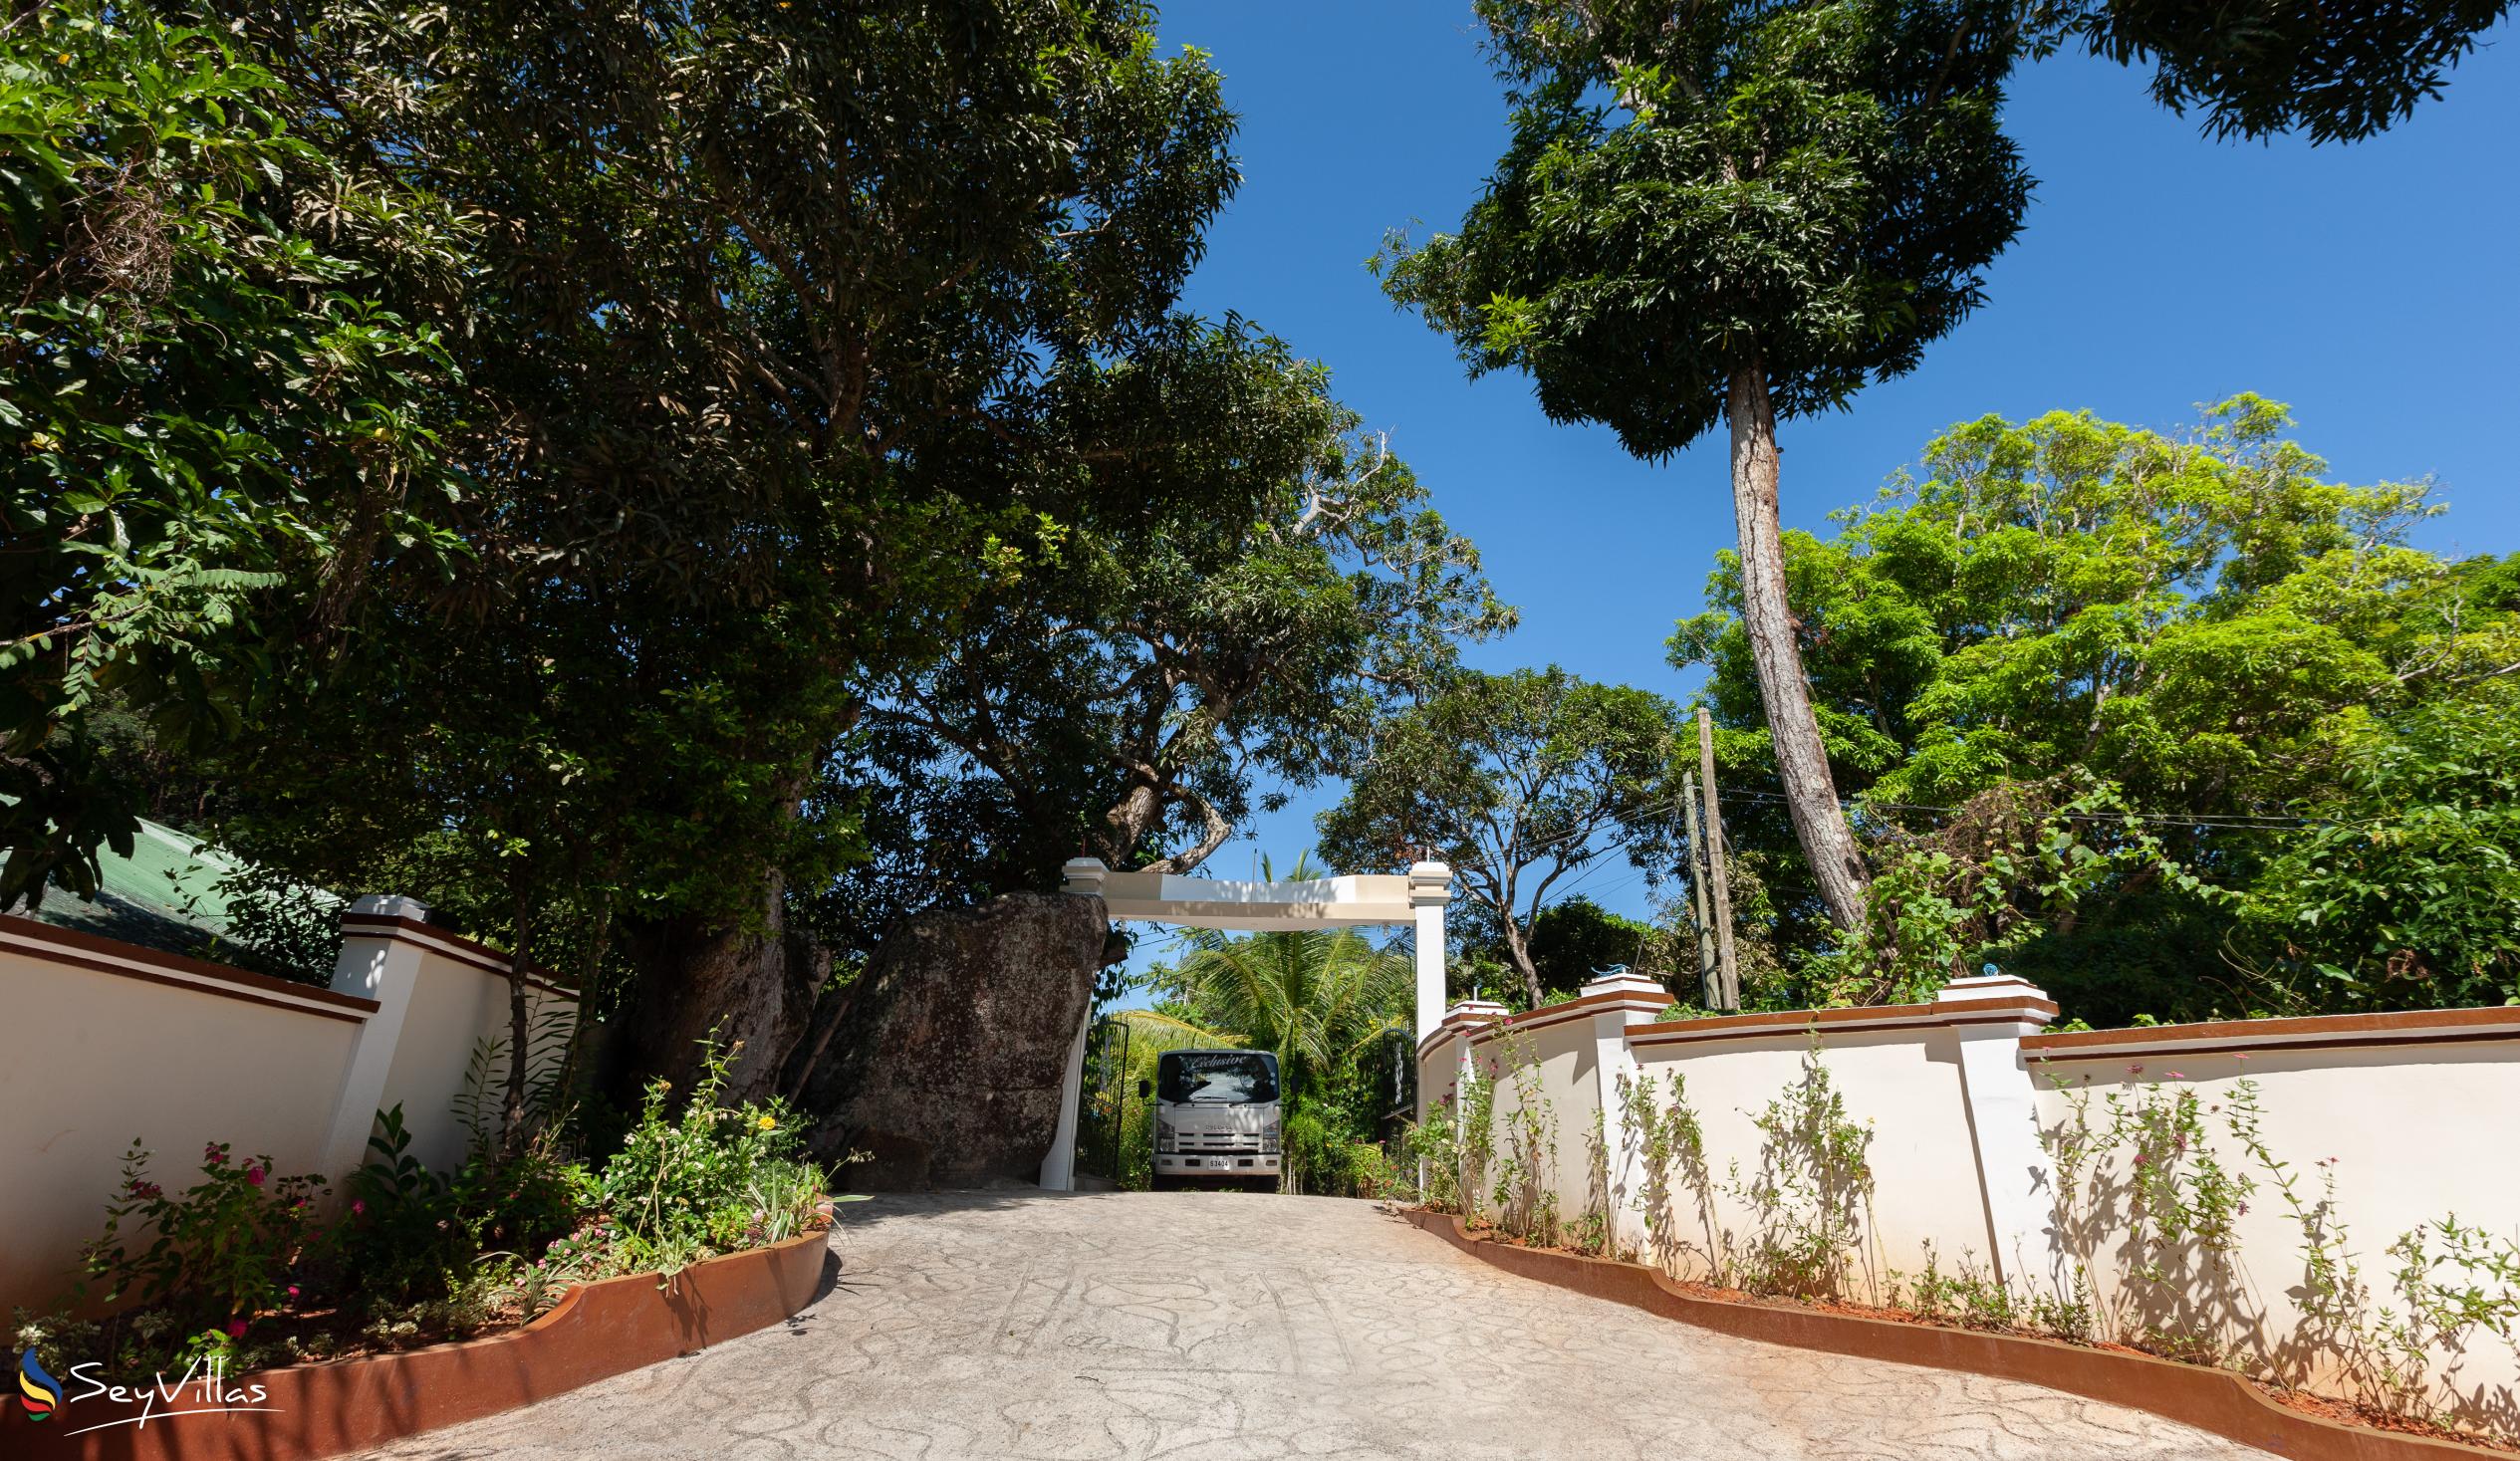 Foto 25: Mountain View Hotel - Location - La Digue (Seychelles)